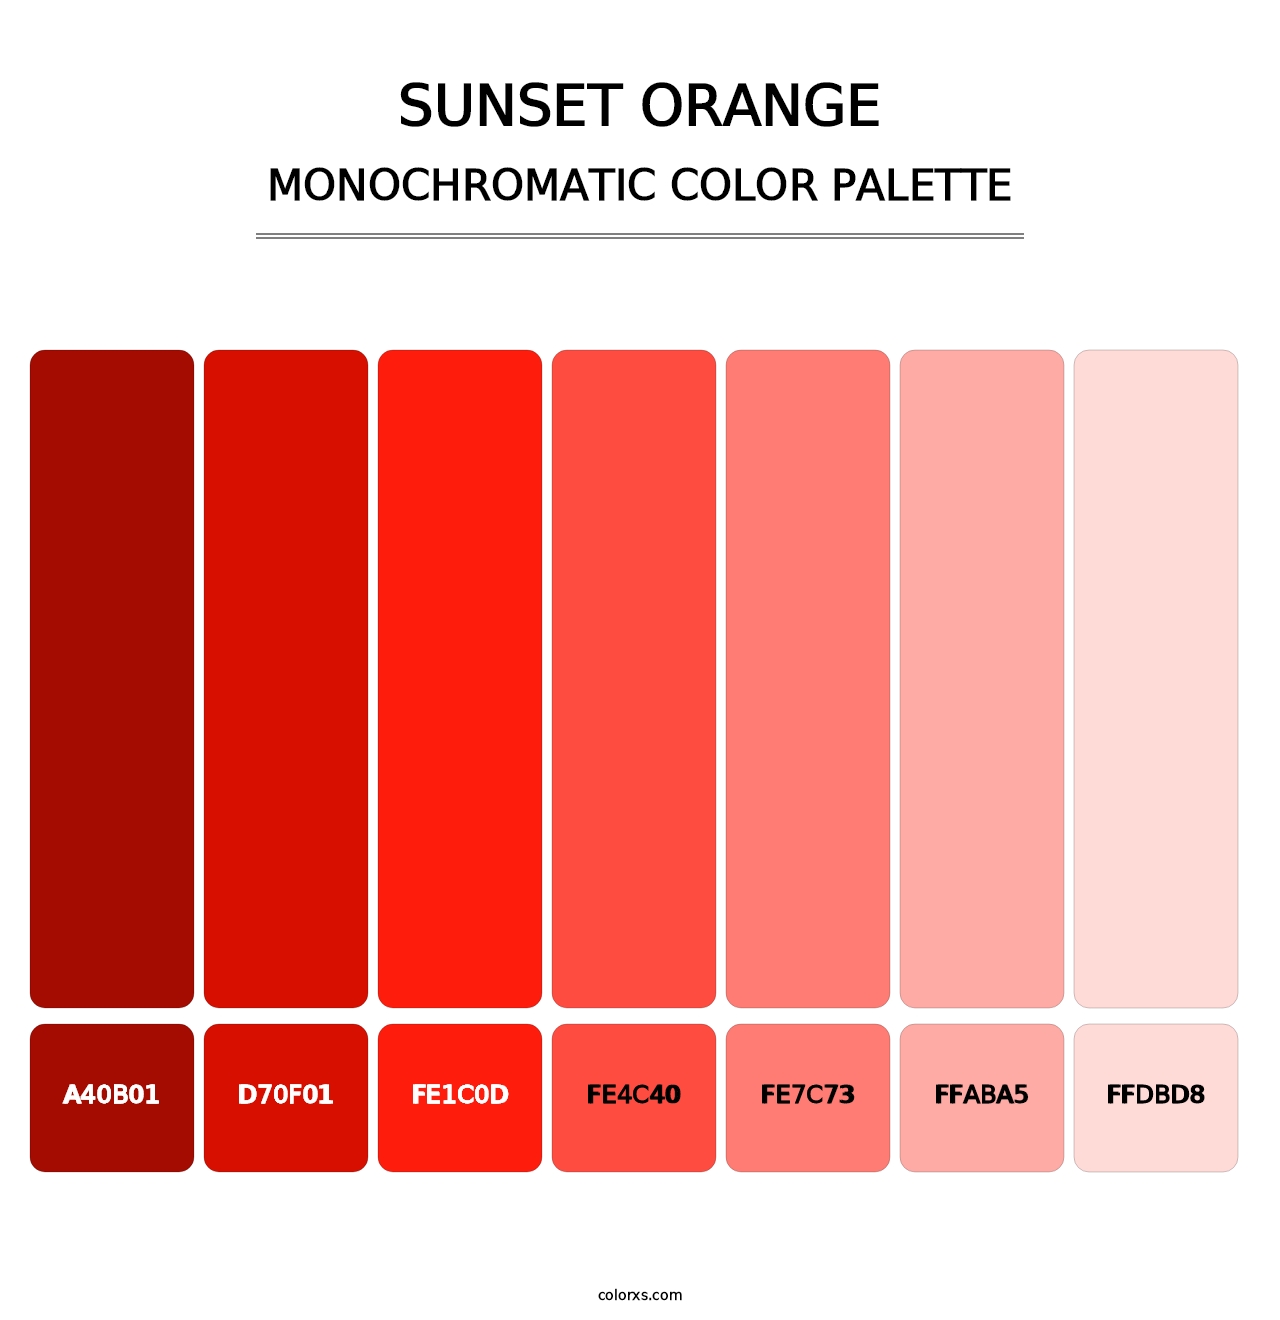 Sunset Orange - Monochromatic Color Palette